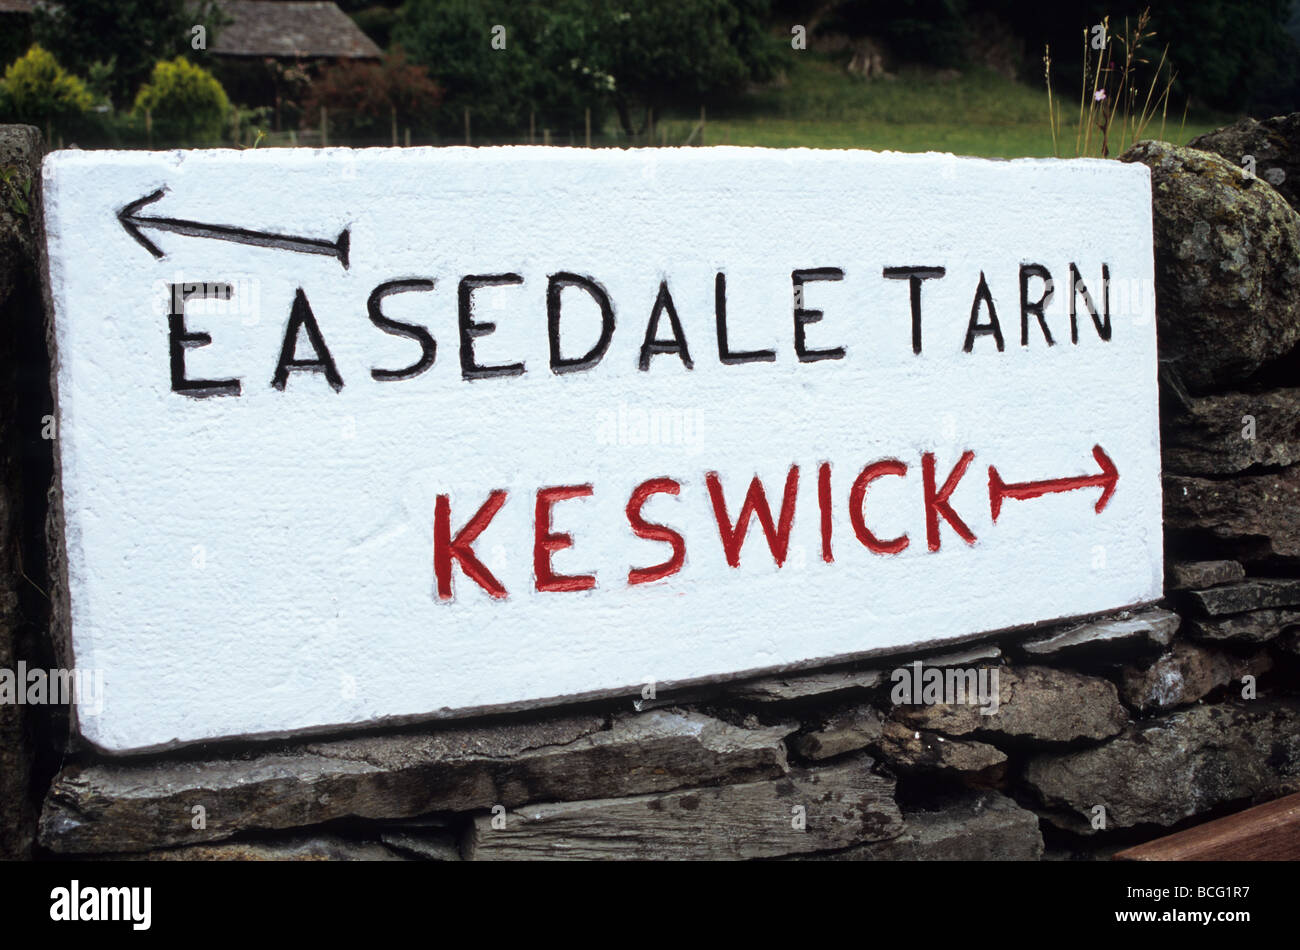 Easedale Tarn Keswick Sign In Grasmere Cumbria Stock Photo